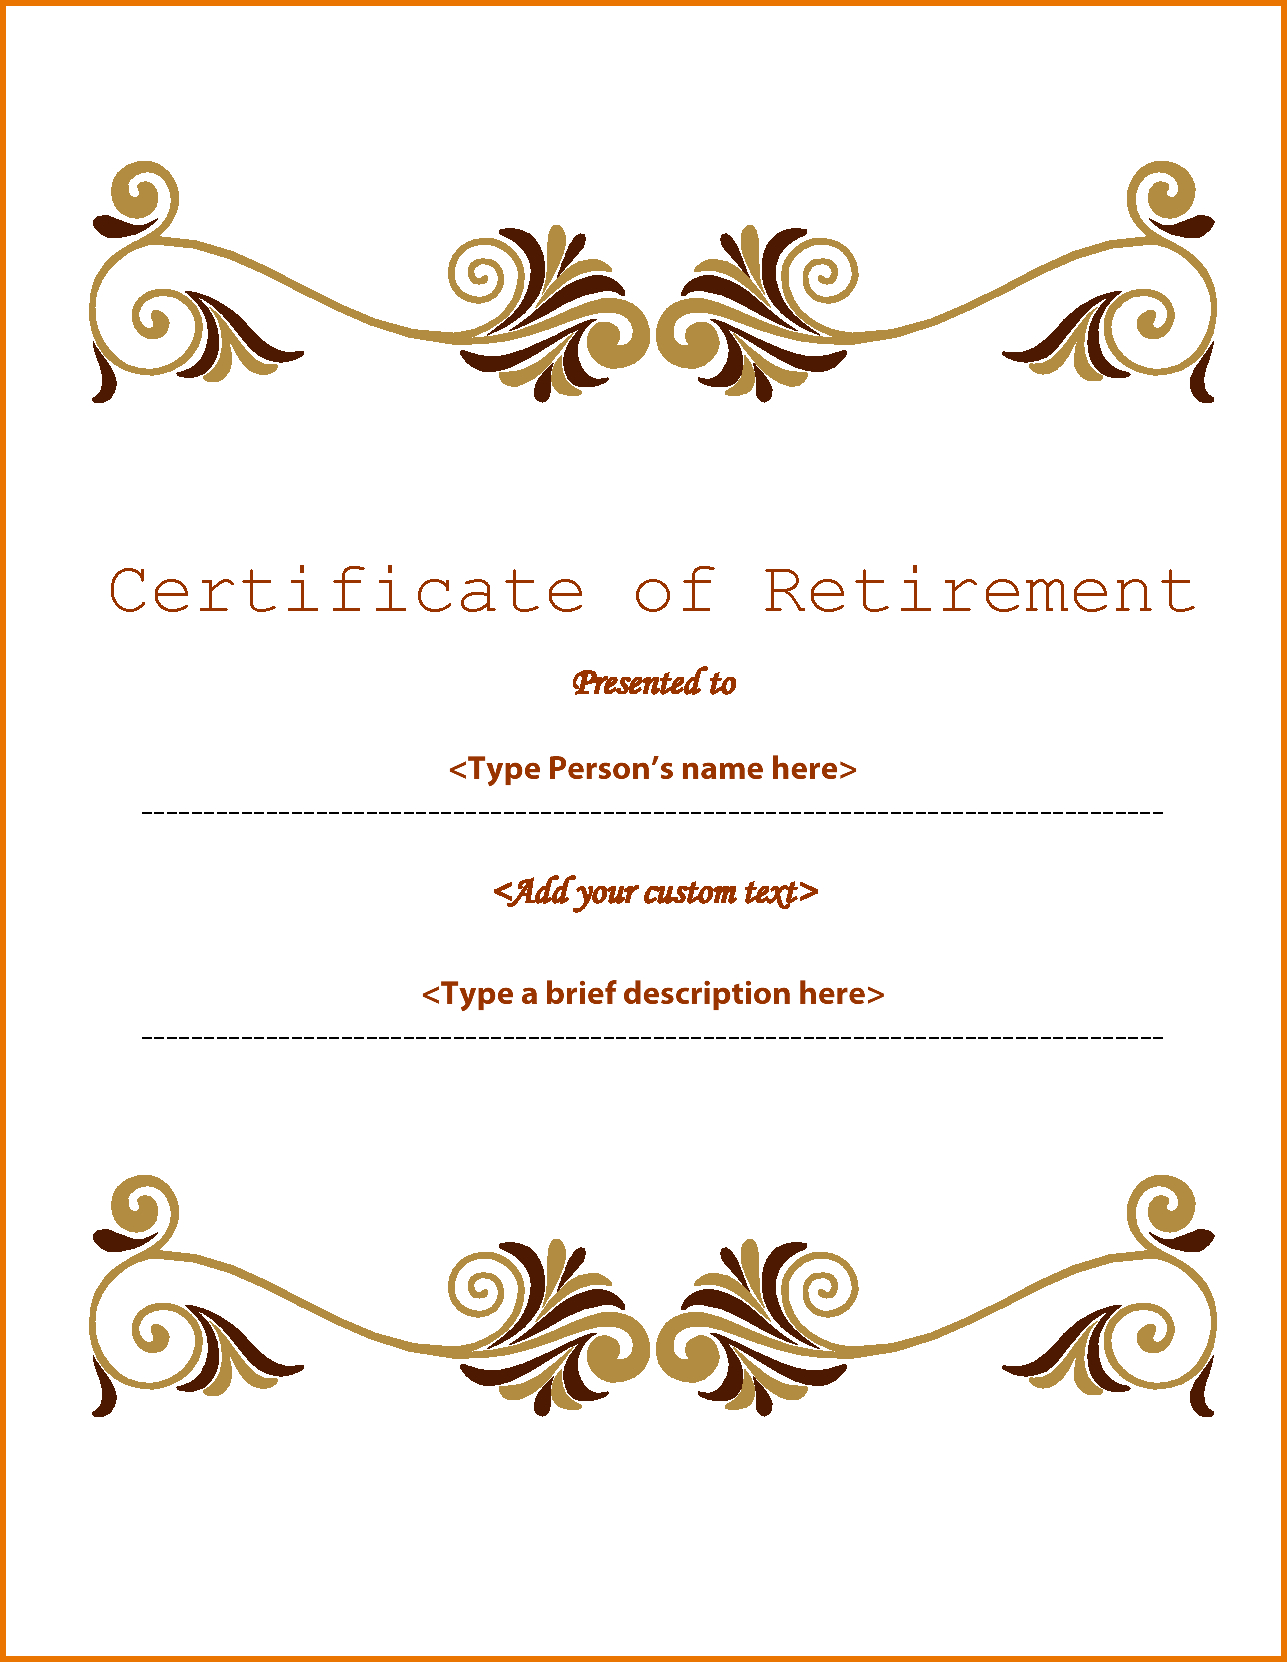 Retirement Certificate Template.65840807 | Scope Of Work Inside Retirement Certificate Template